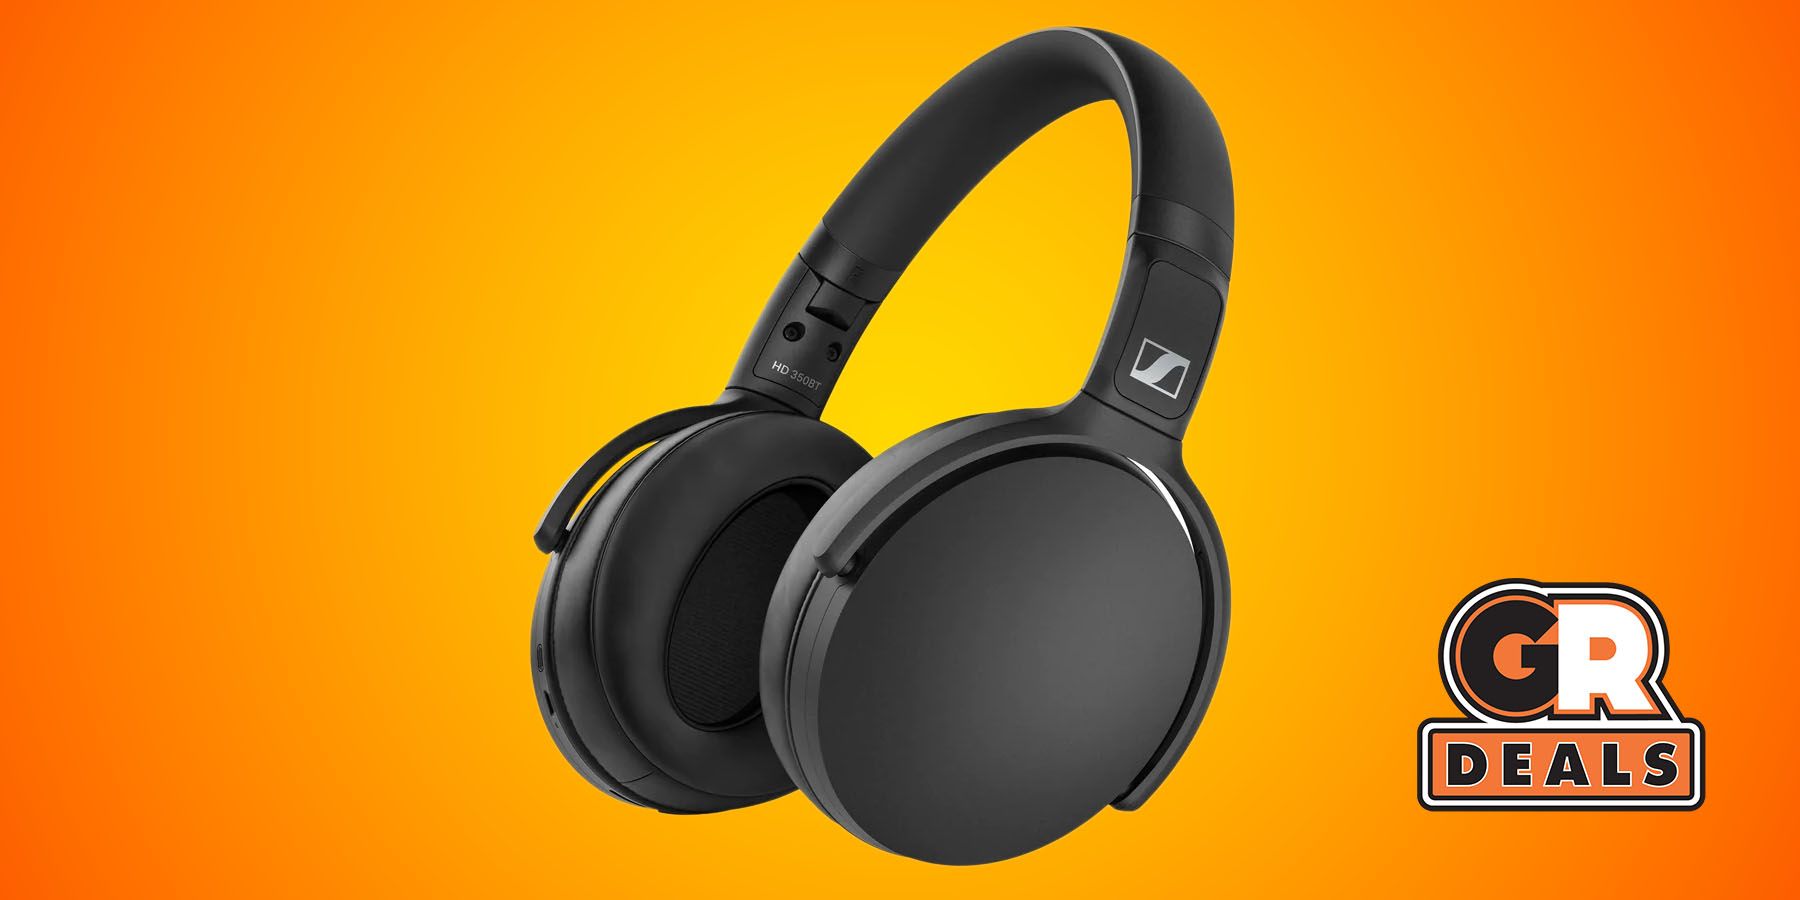 Get the Sennheiser HD 350BT Wireless Headphones for Only $89.95